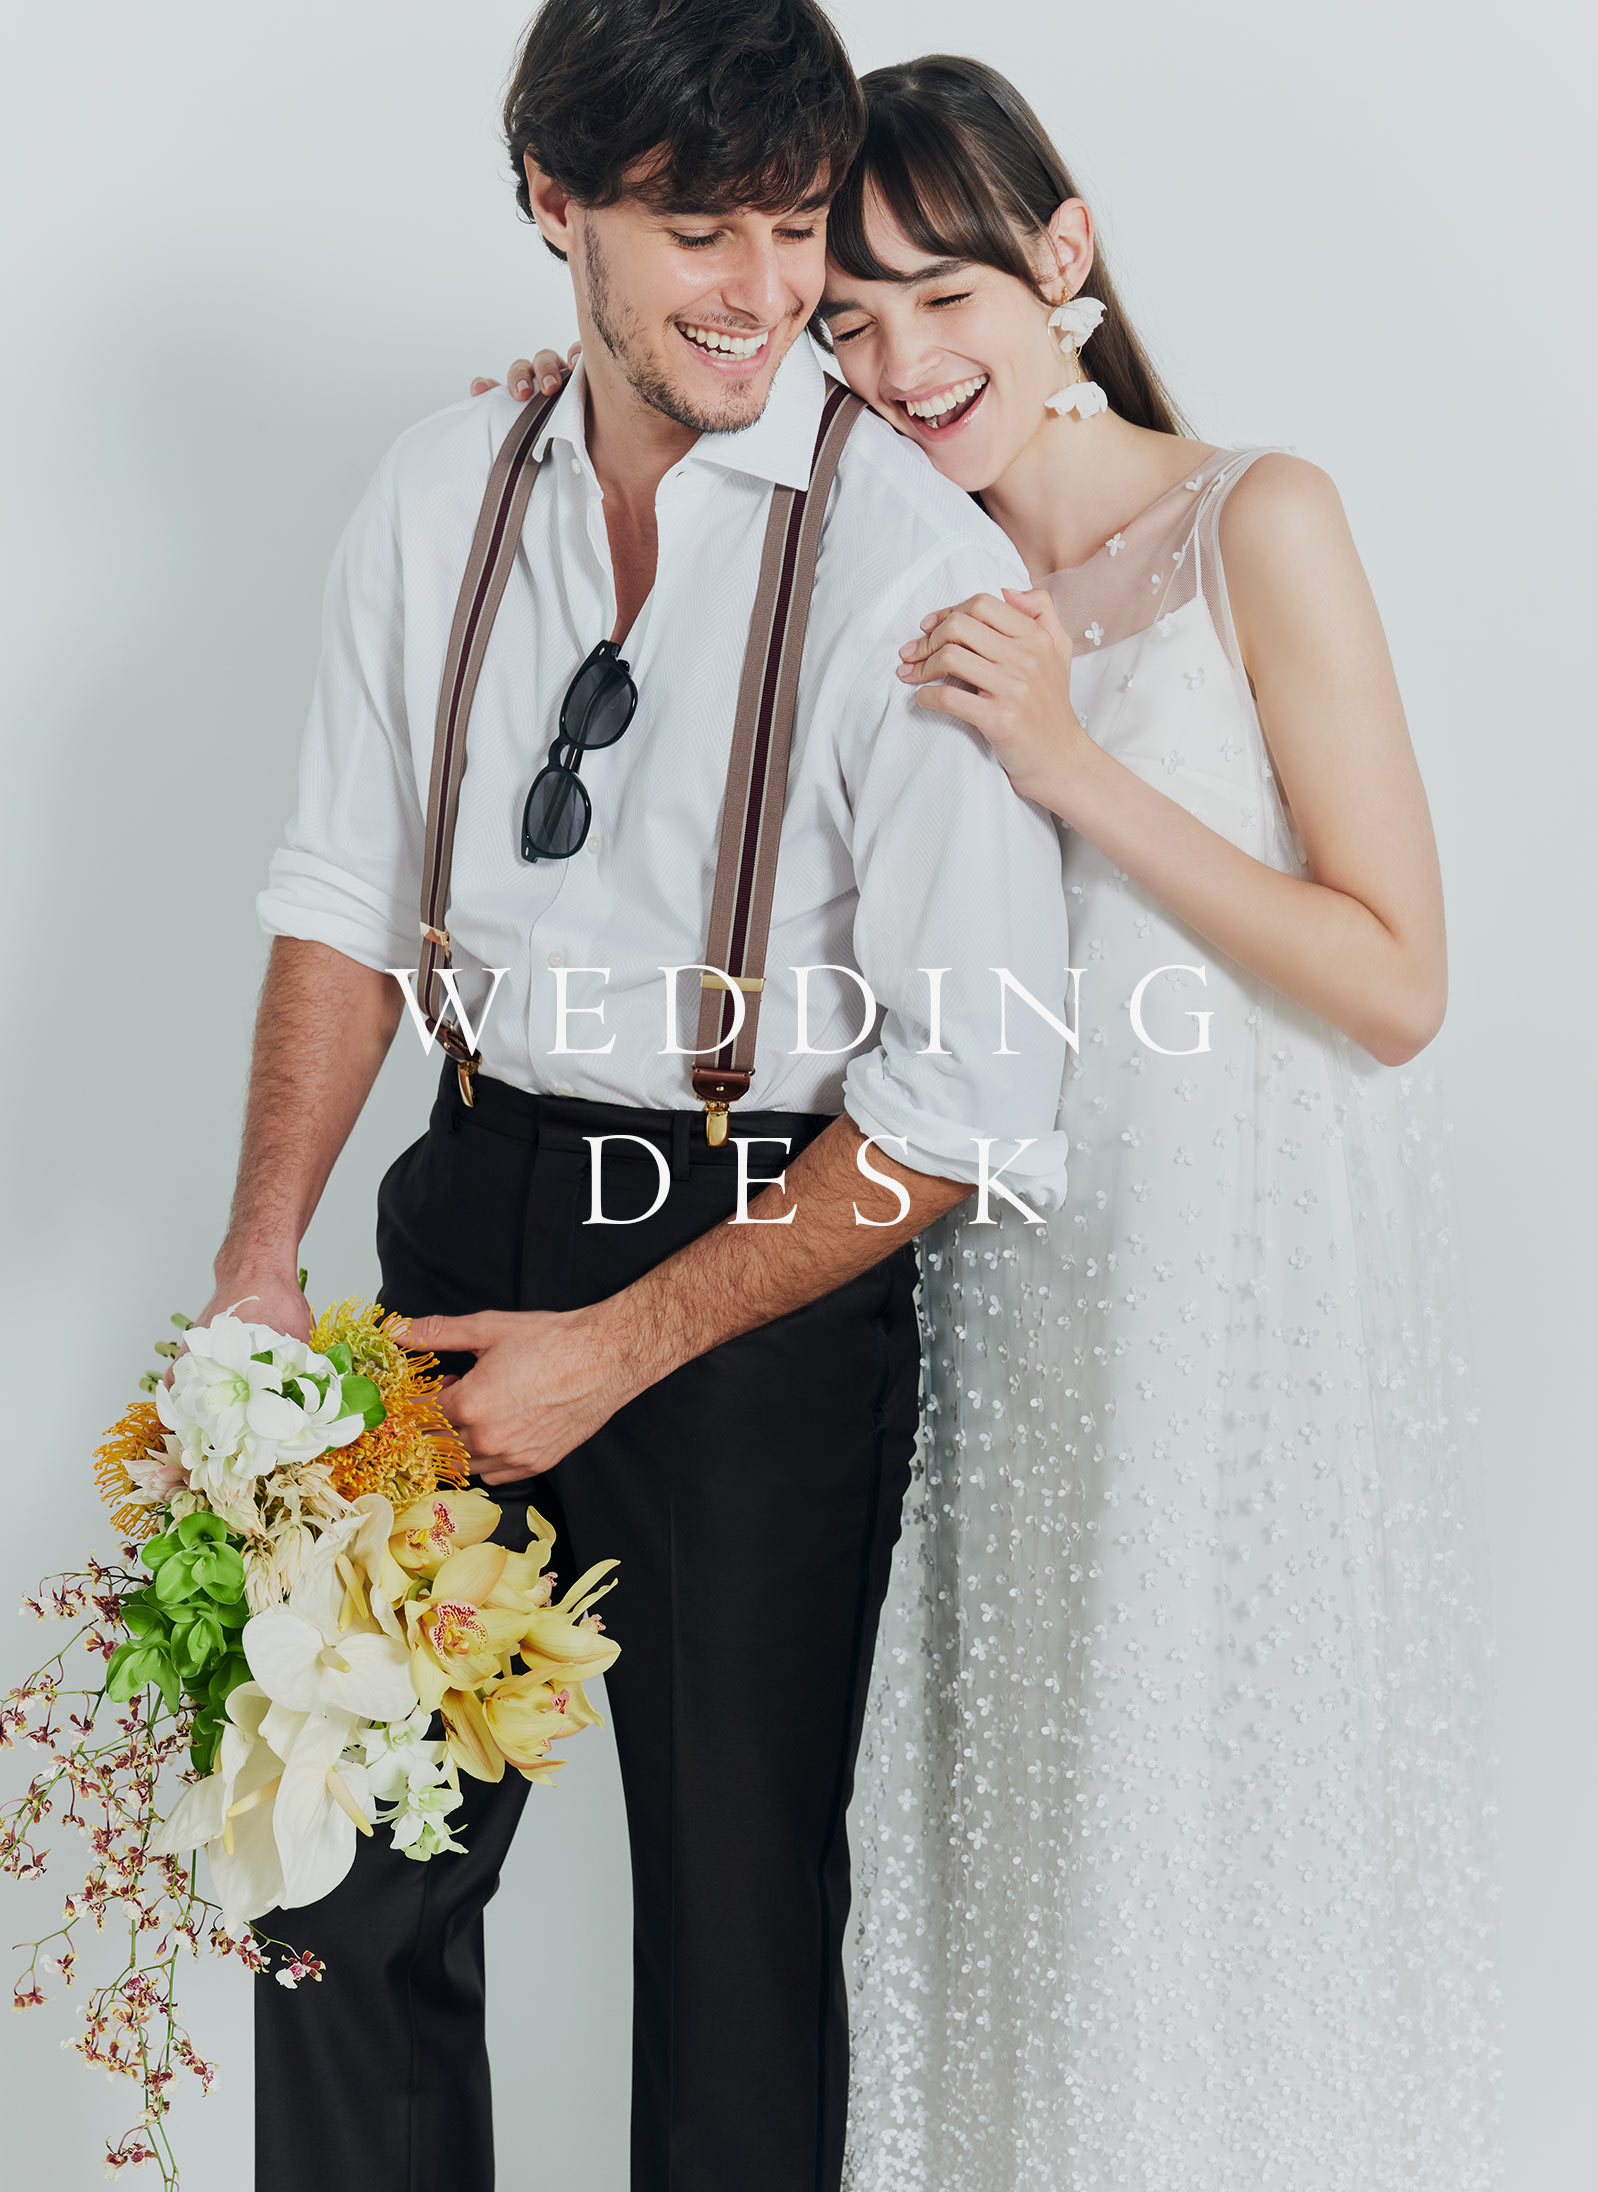 TAKAMI BRIDAL WEDDING DESK KOBE スマートフォン用の画像